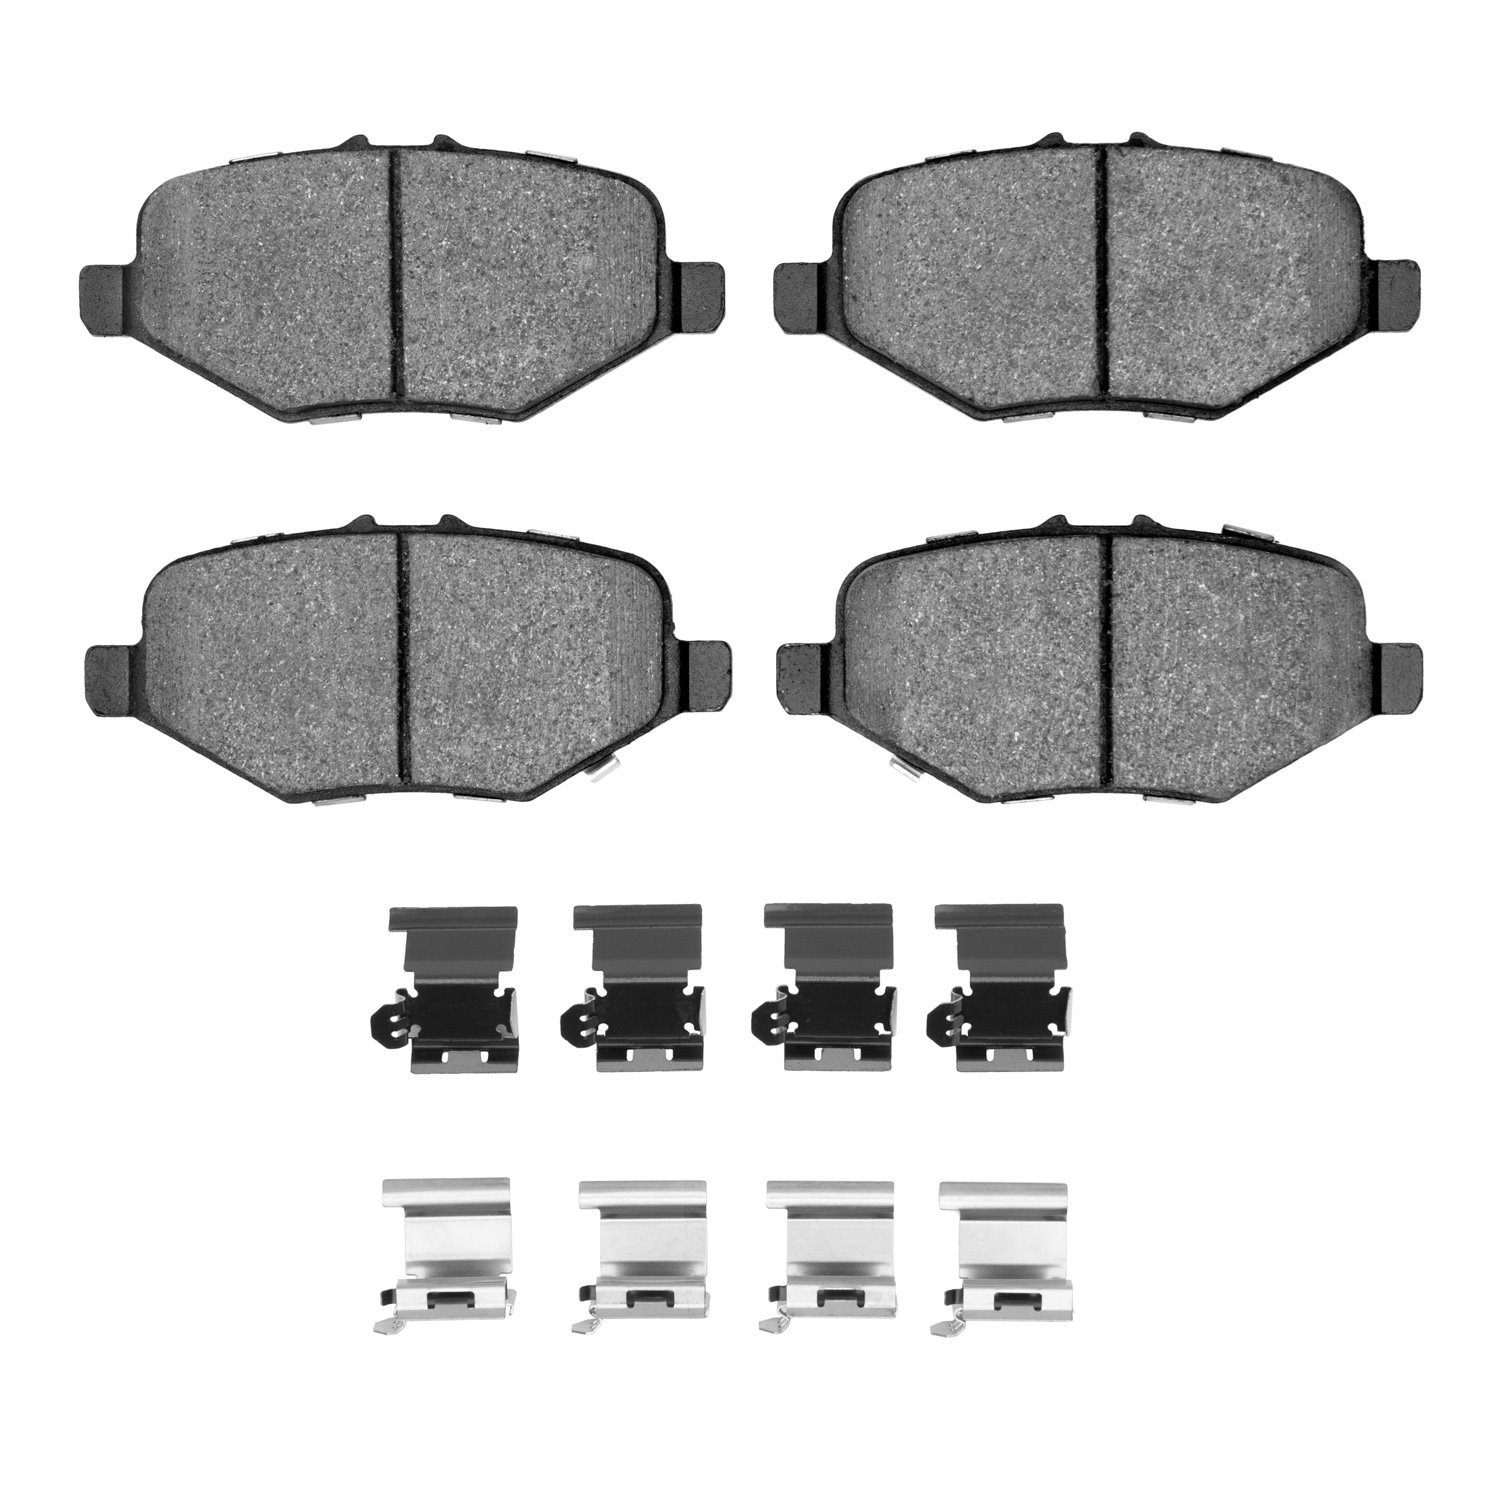 1310-1612-01 3000-Series Ceramic Brake Pads & Hardware Kit, 2013-2019 Ford/Lincoln/Mercury/Mazda, Position: Rear